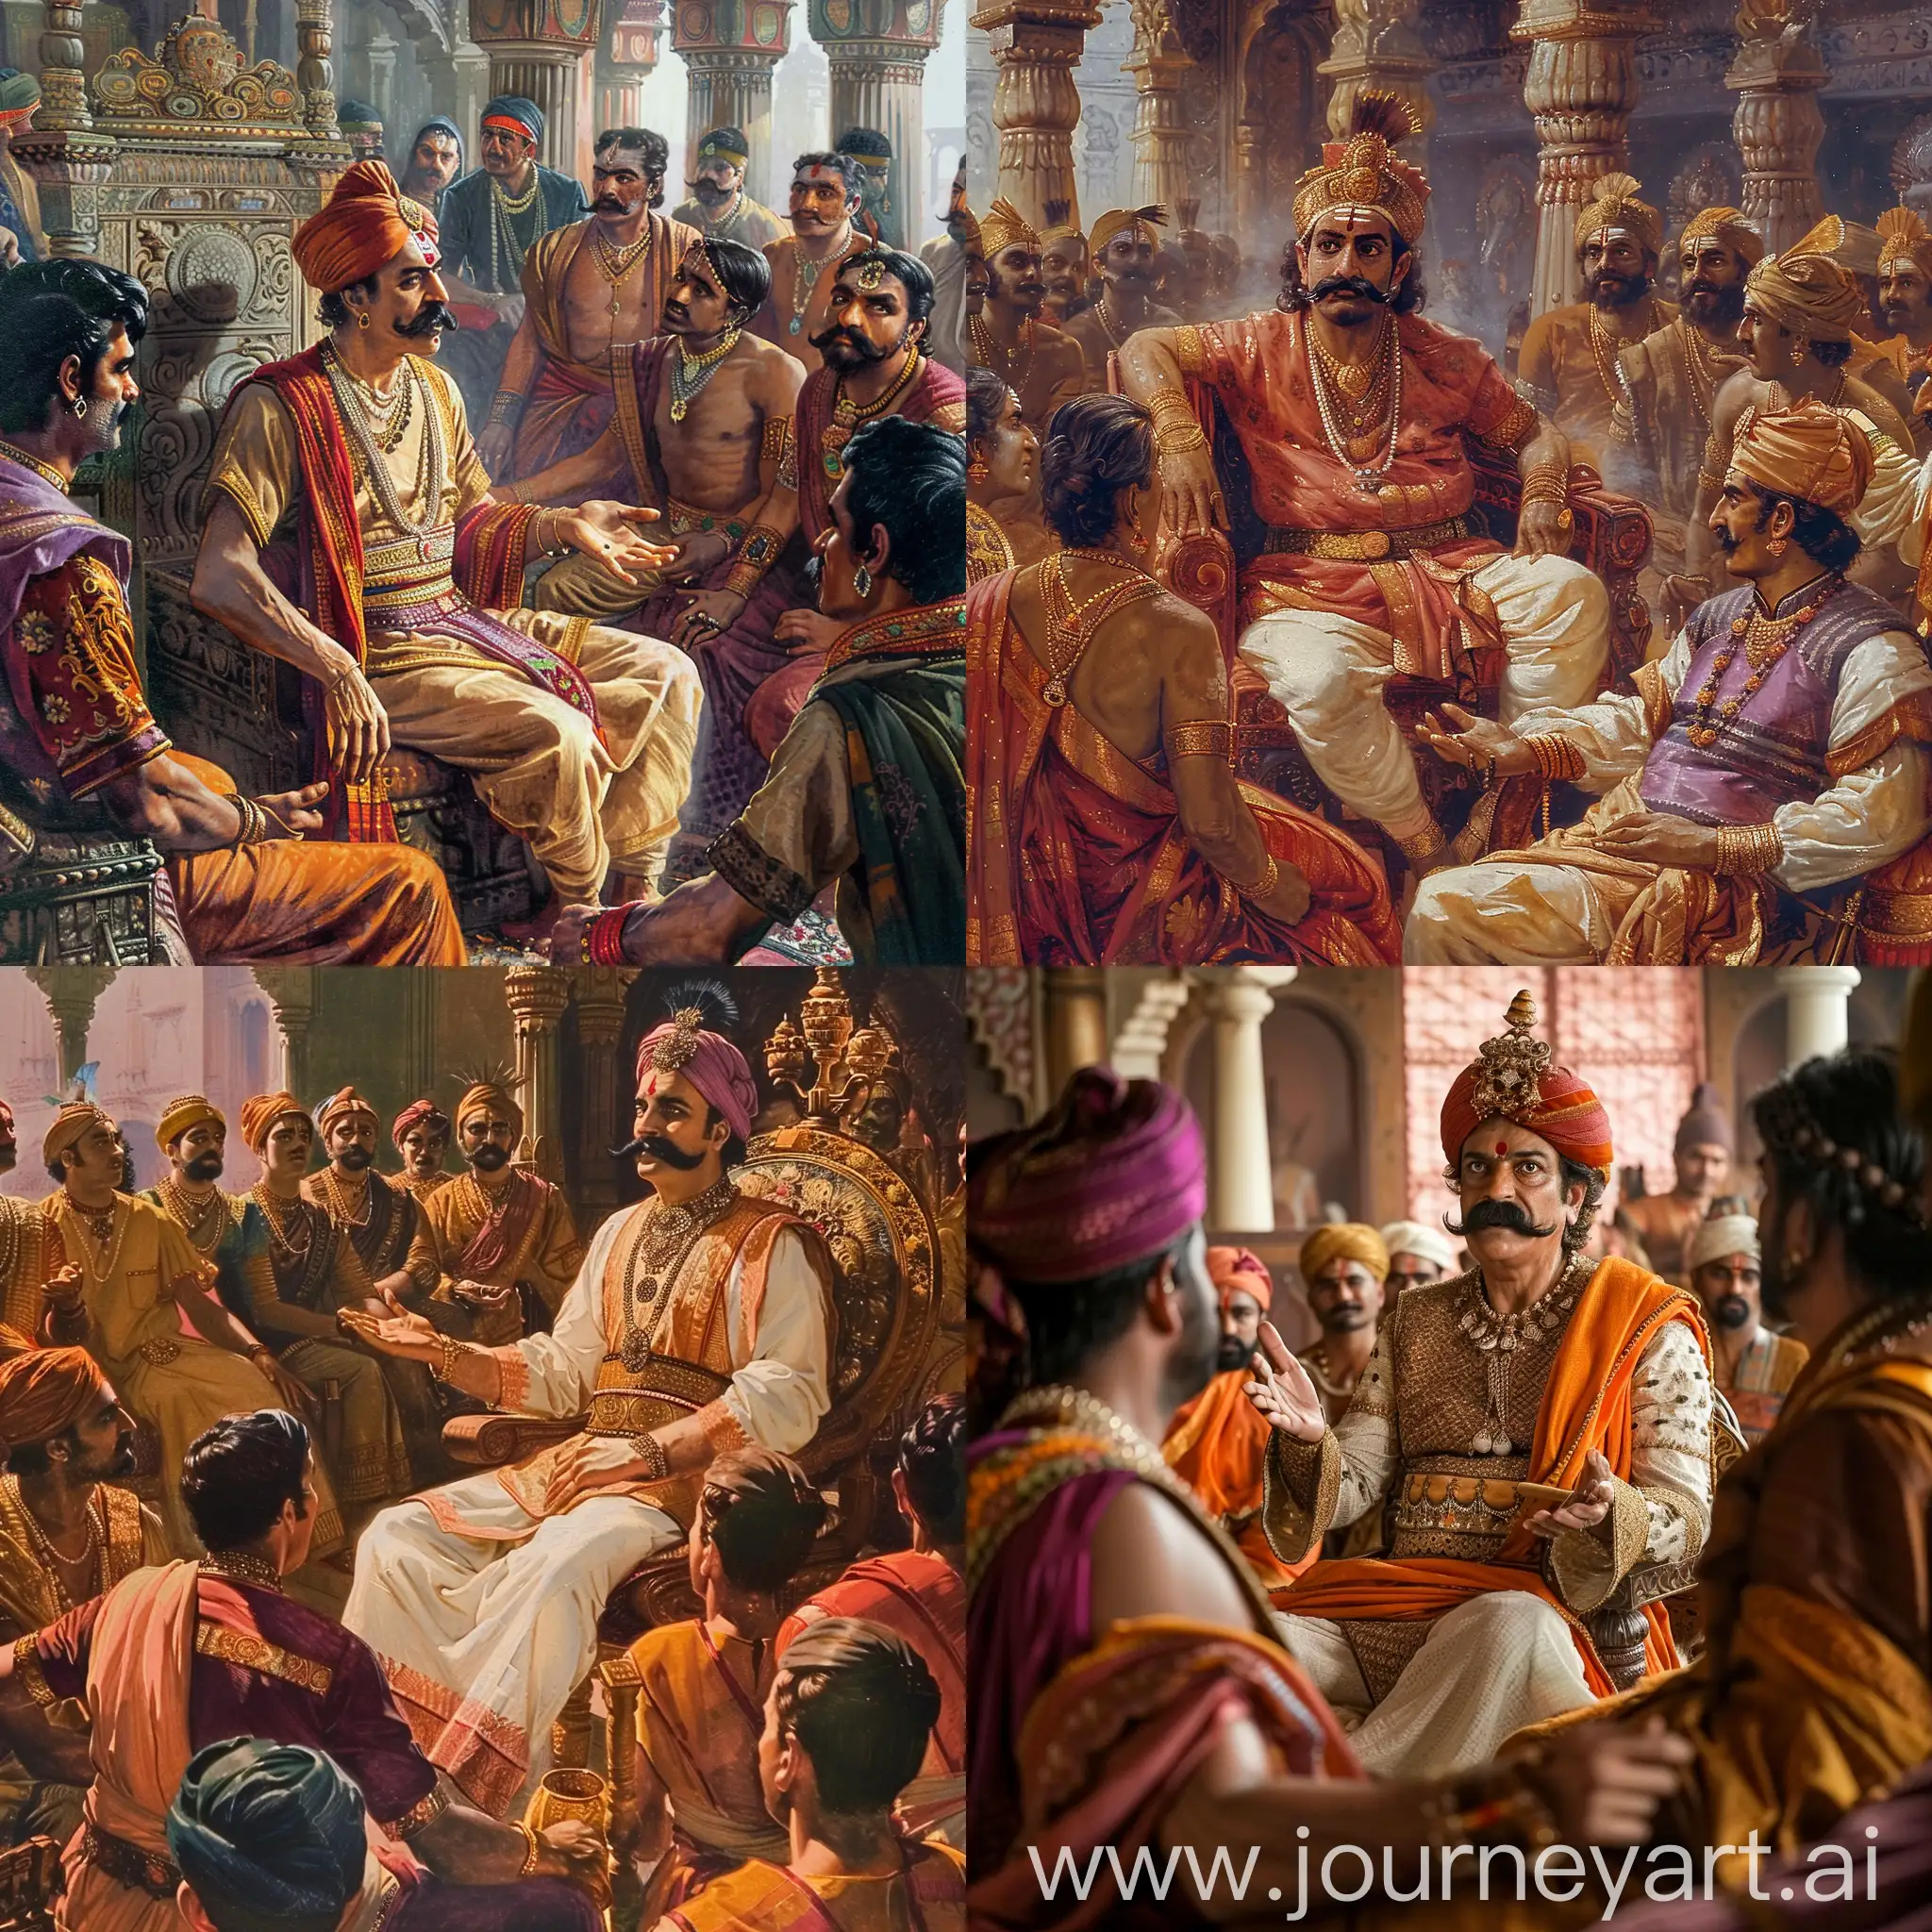 Regal-Rajput-King-Seeks-Counsel-in-Royal-Court